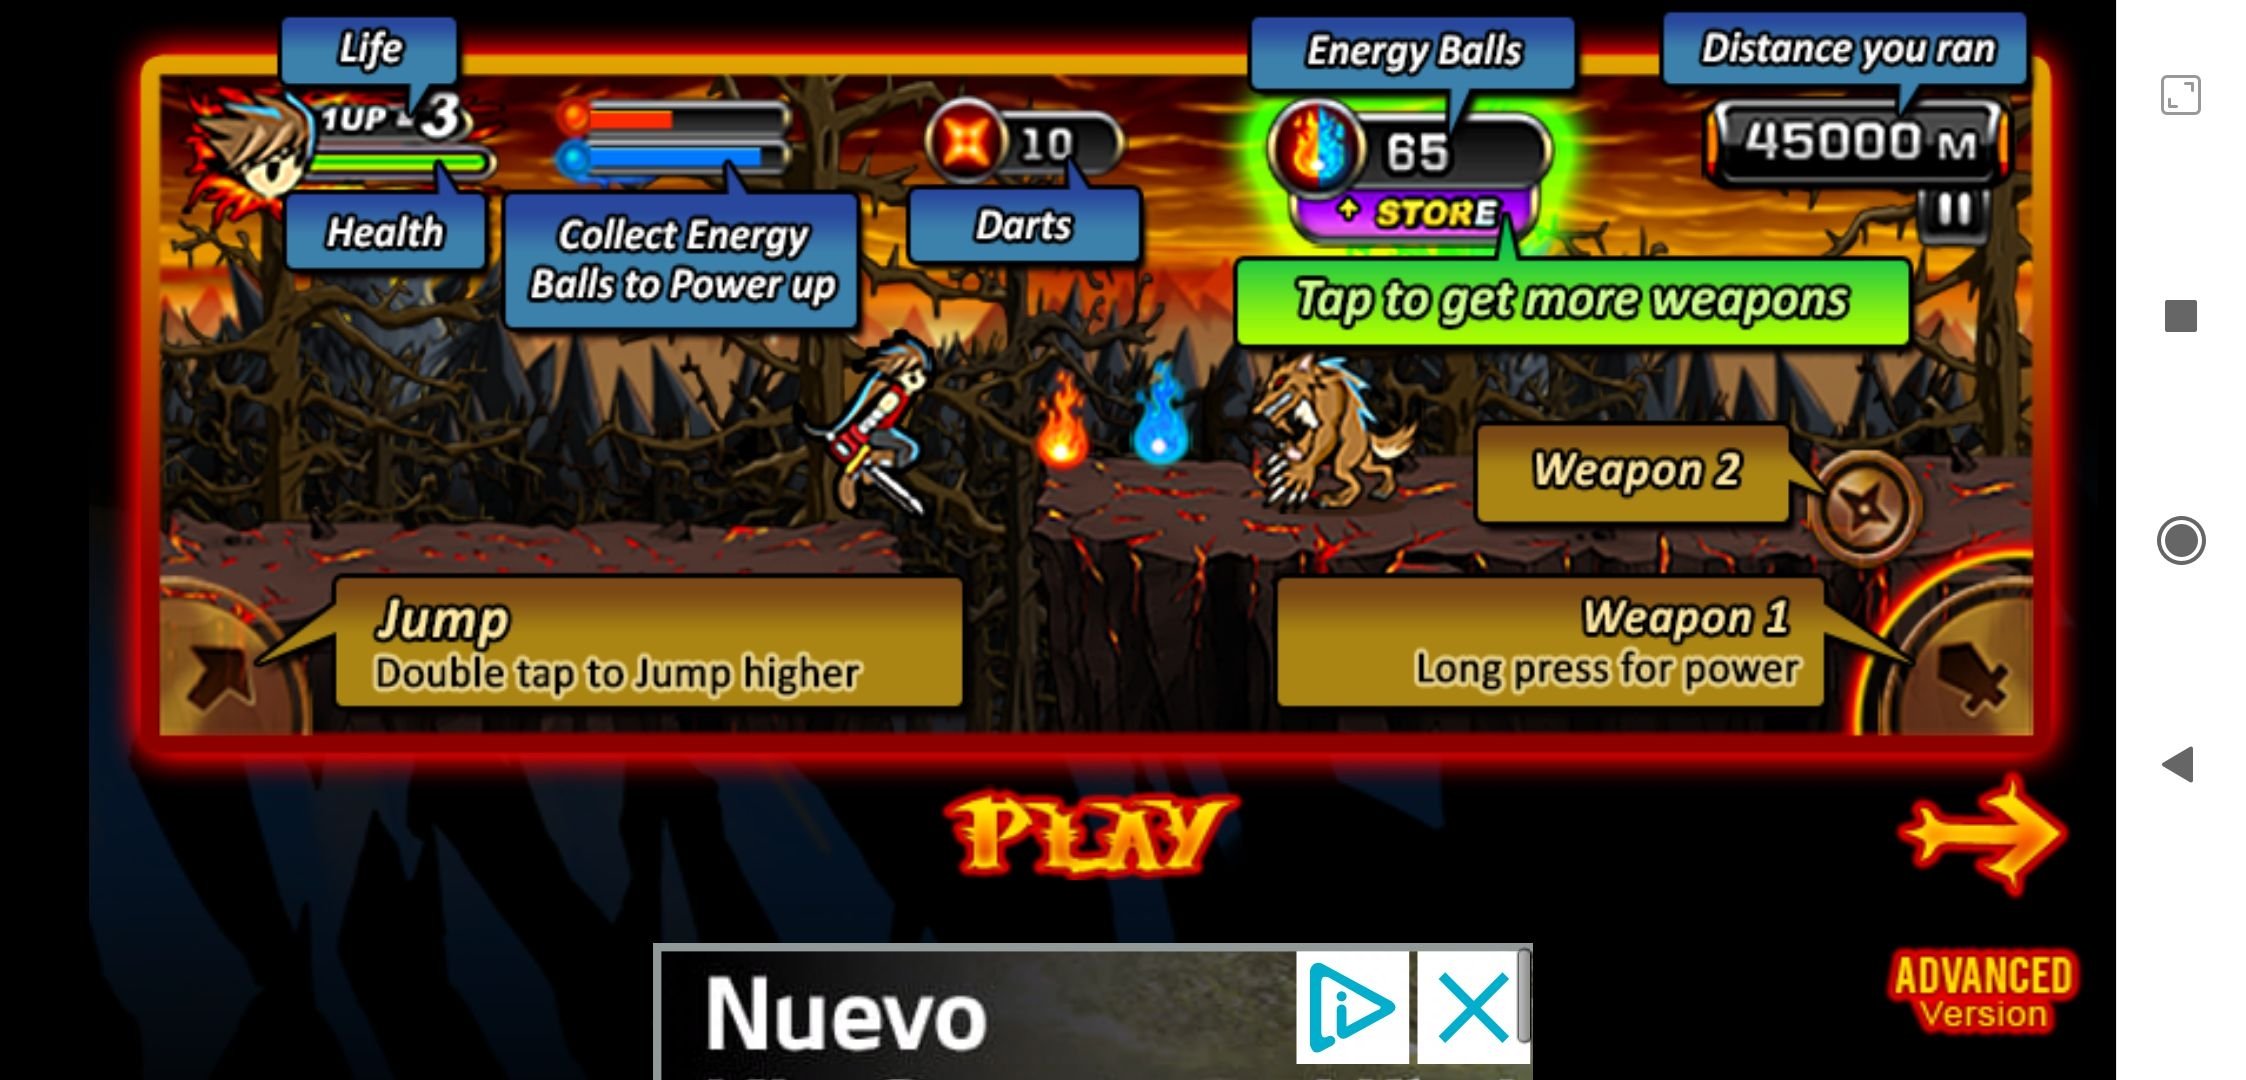 Download do APK de O jogo do diabo para Android